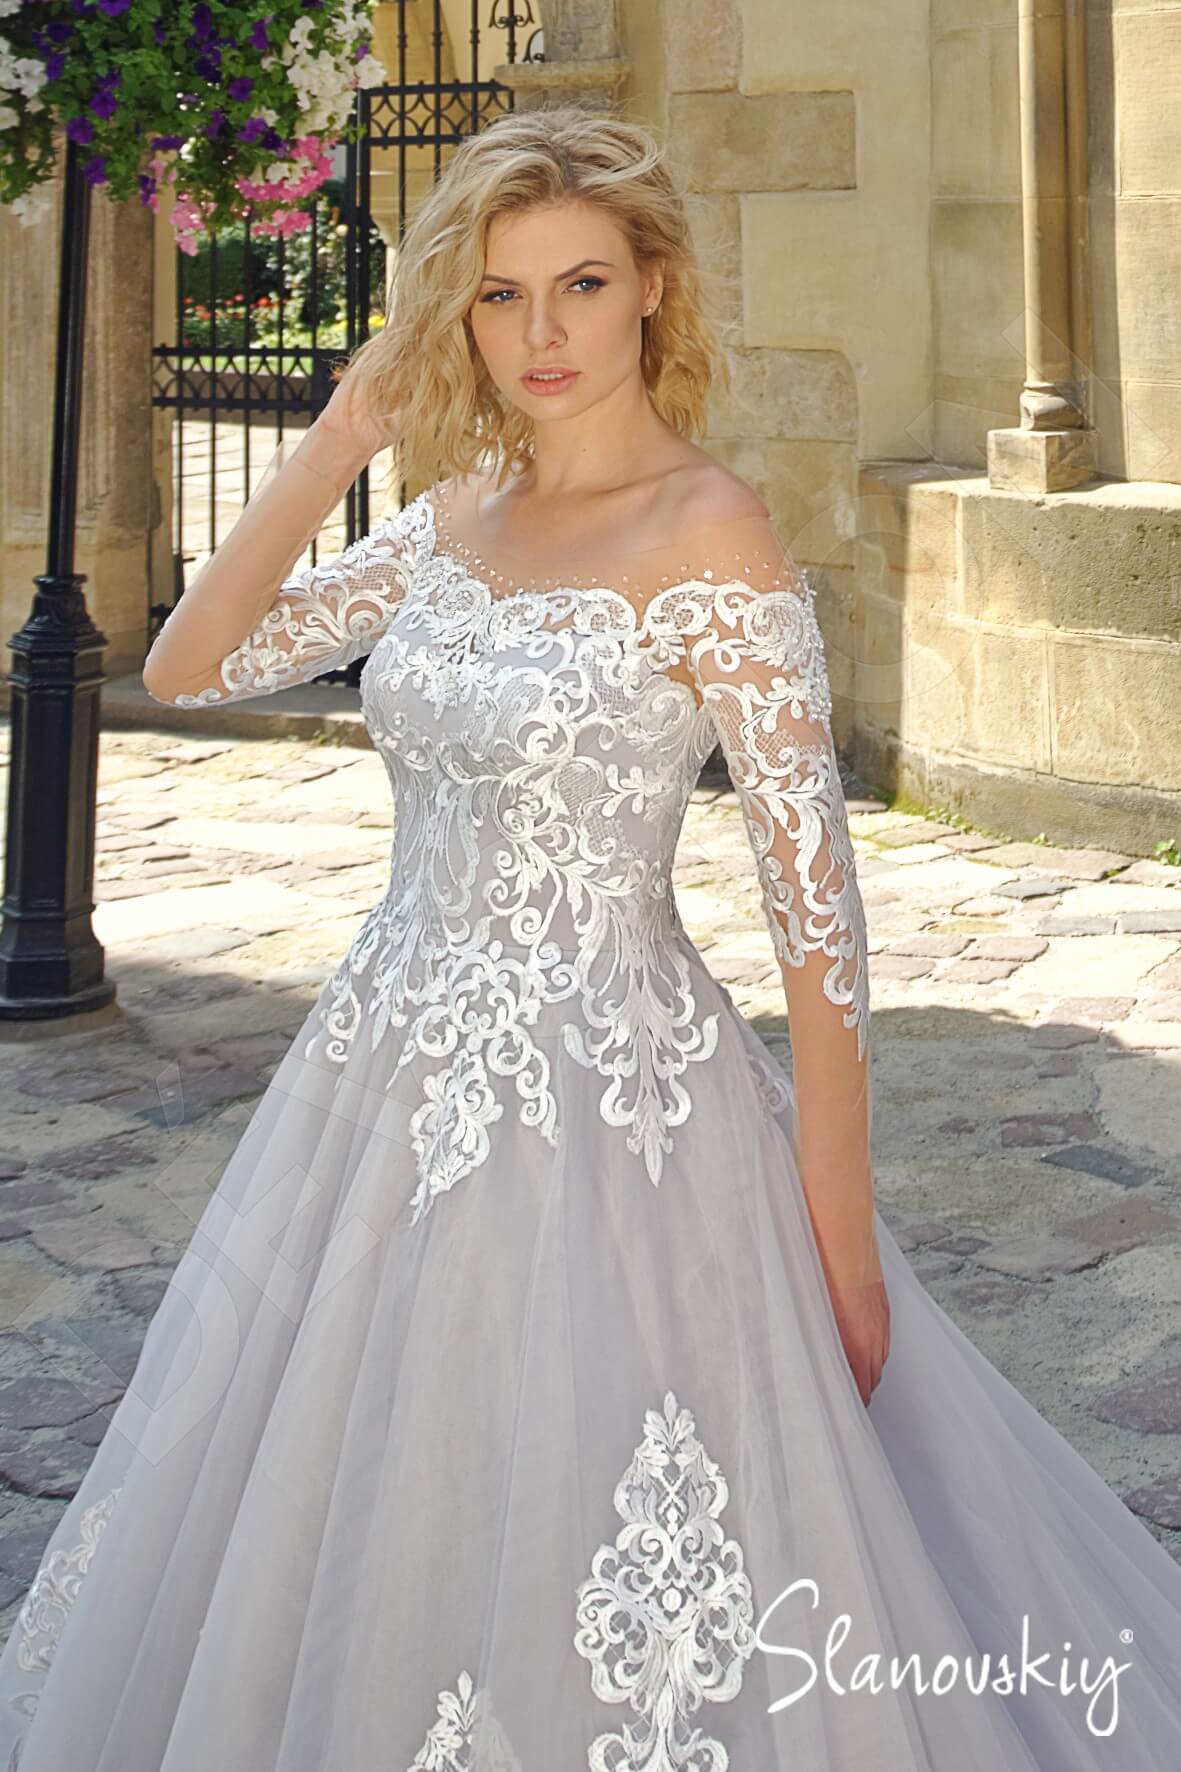 Vicky Illusion back Princess/Ball Gown 3/4 sleeve Wedding Dress 2